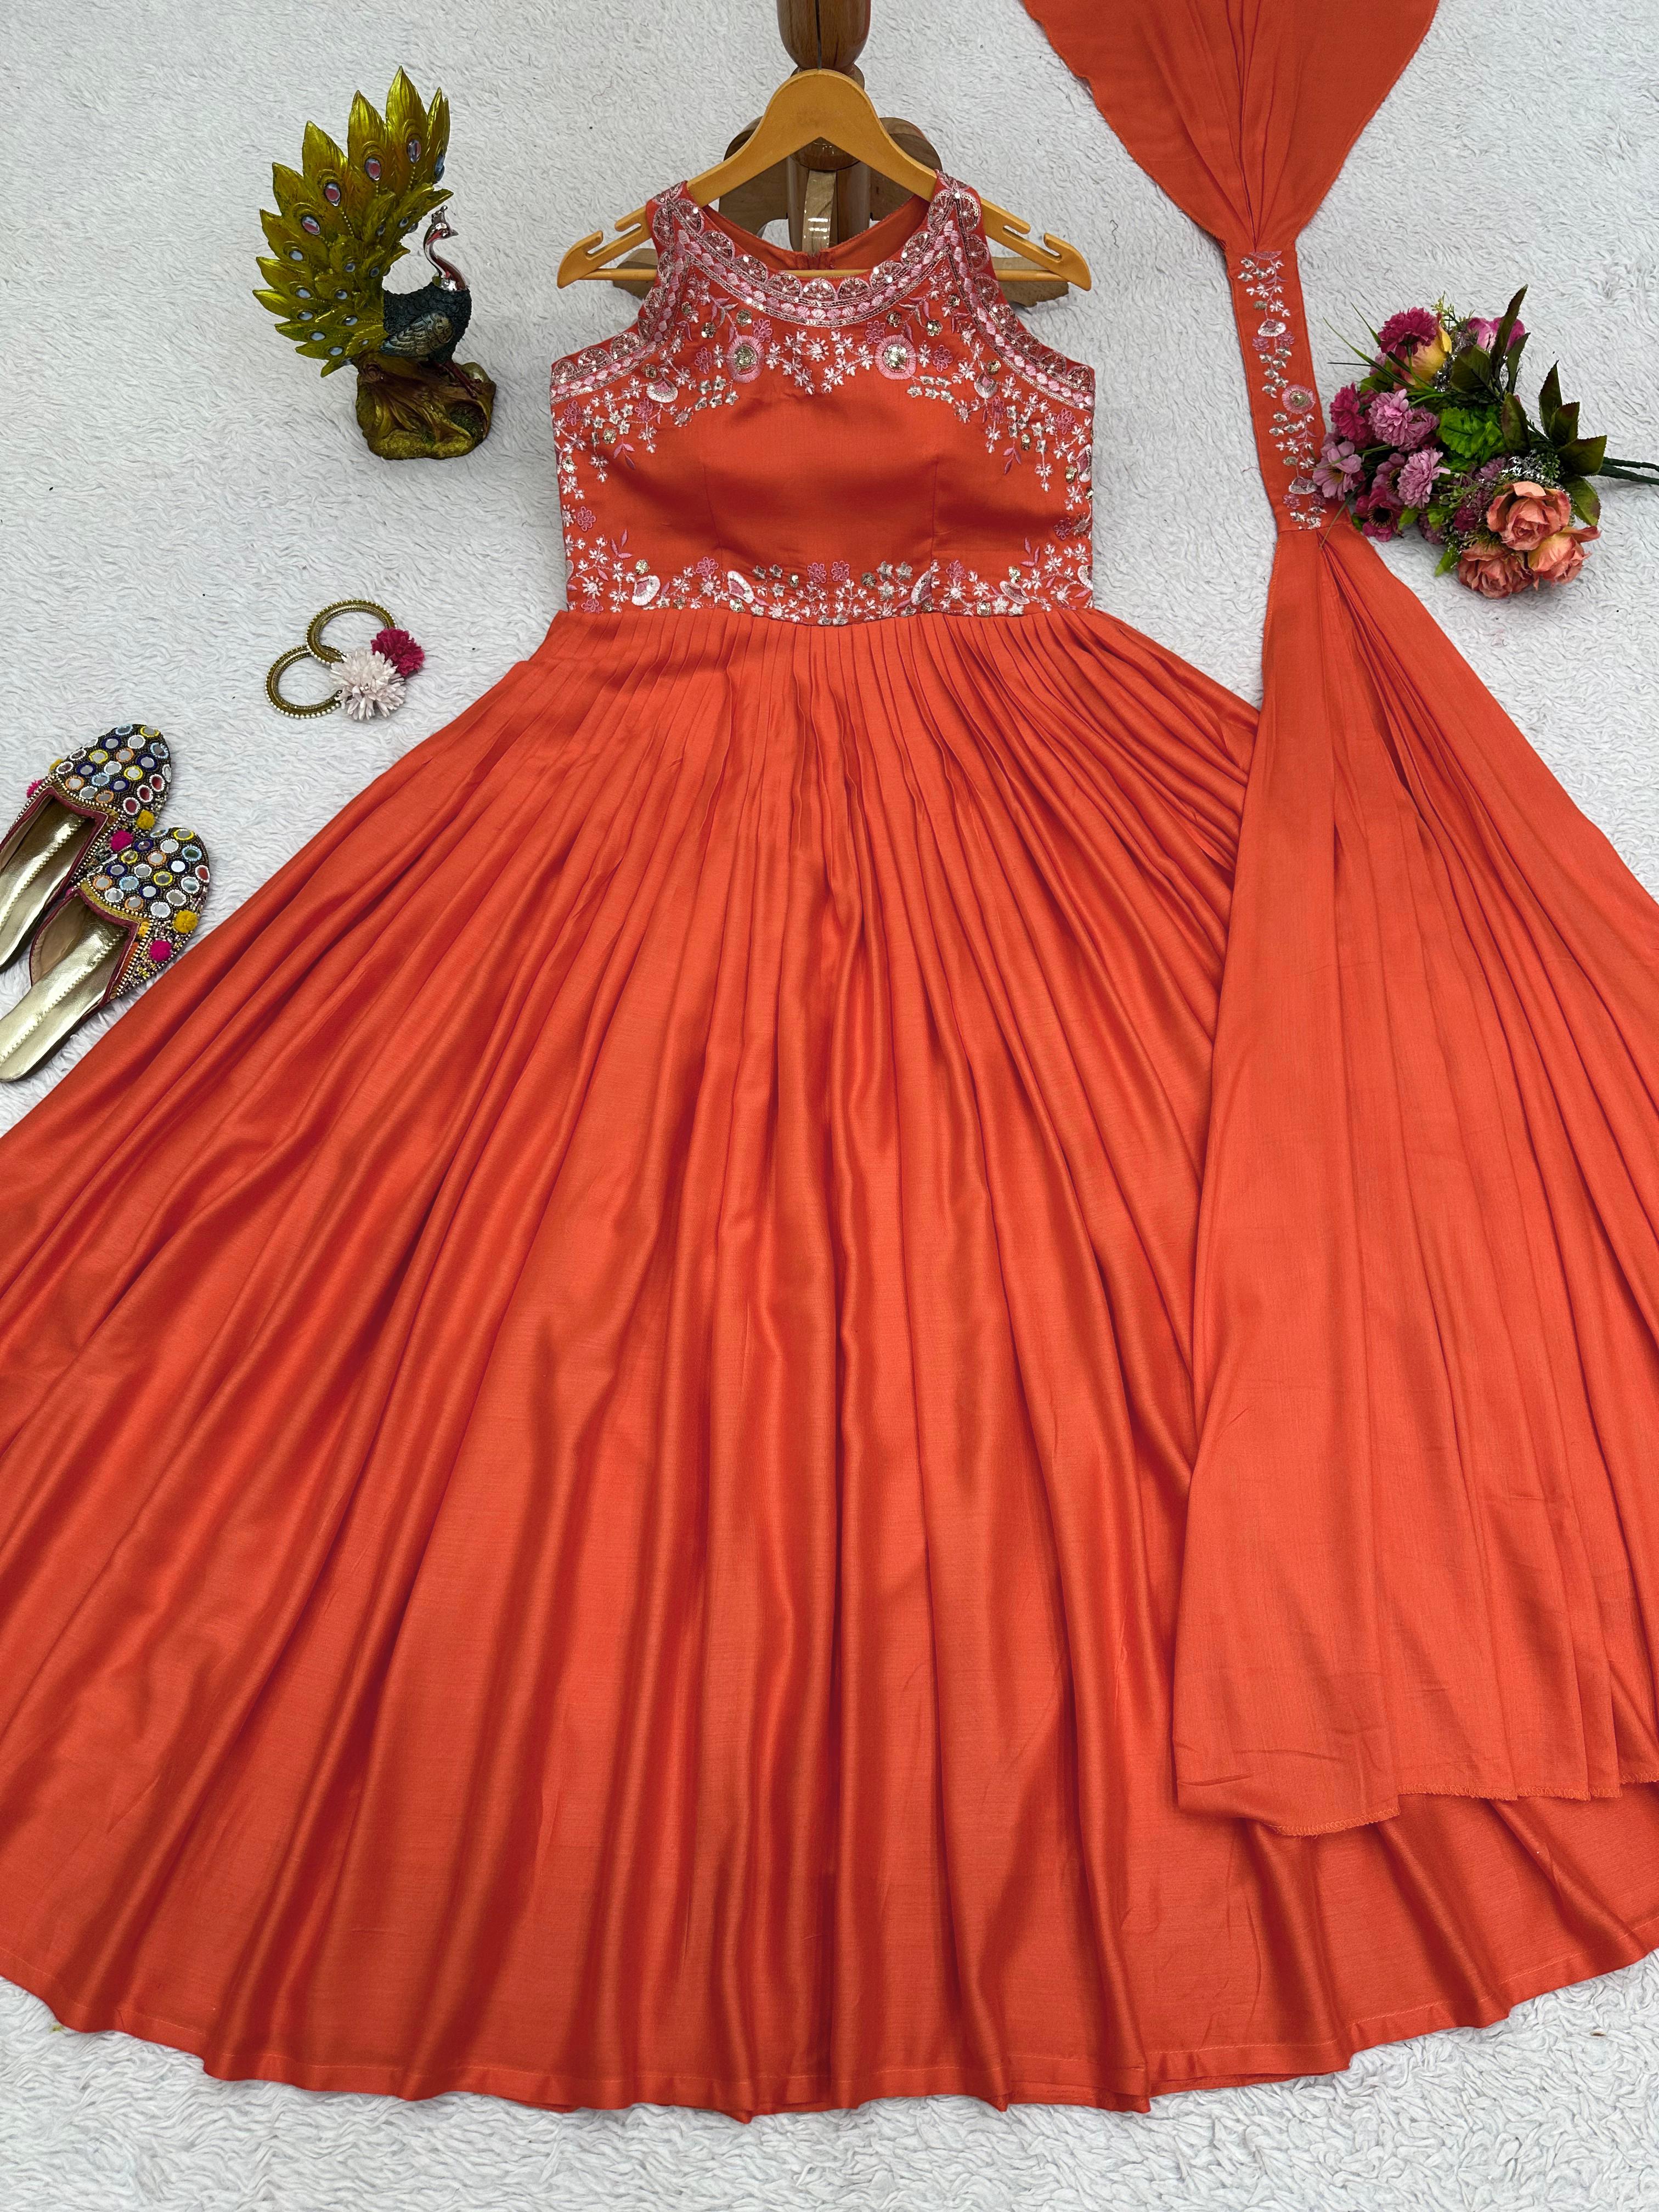 Outstanding Thread Work Orange Color Gown